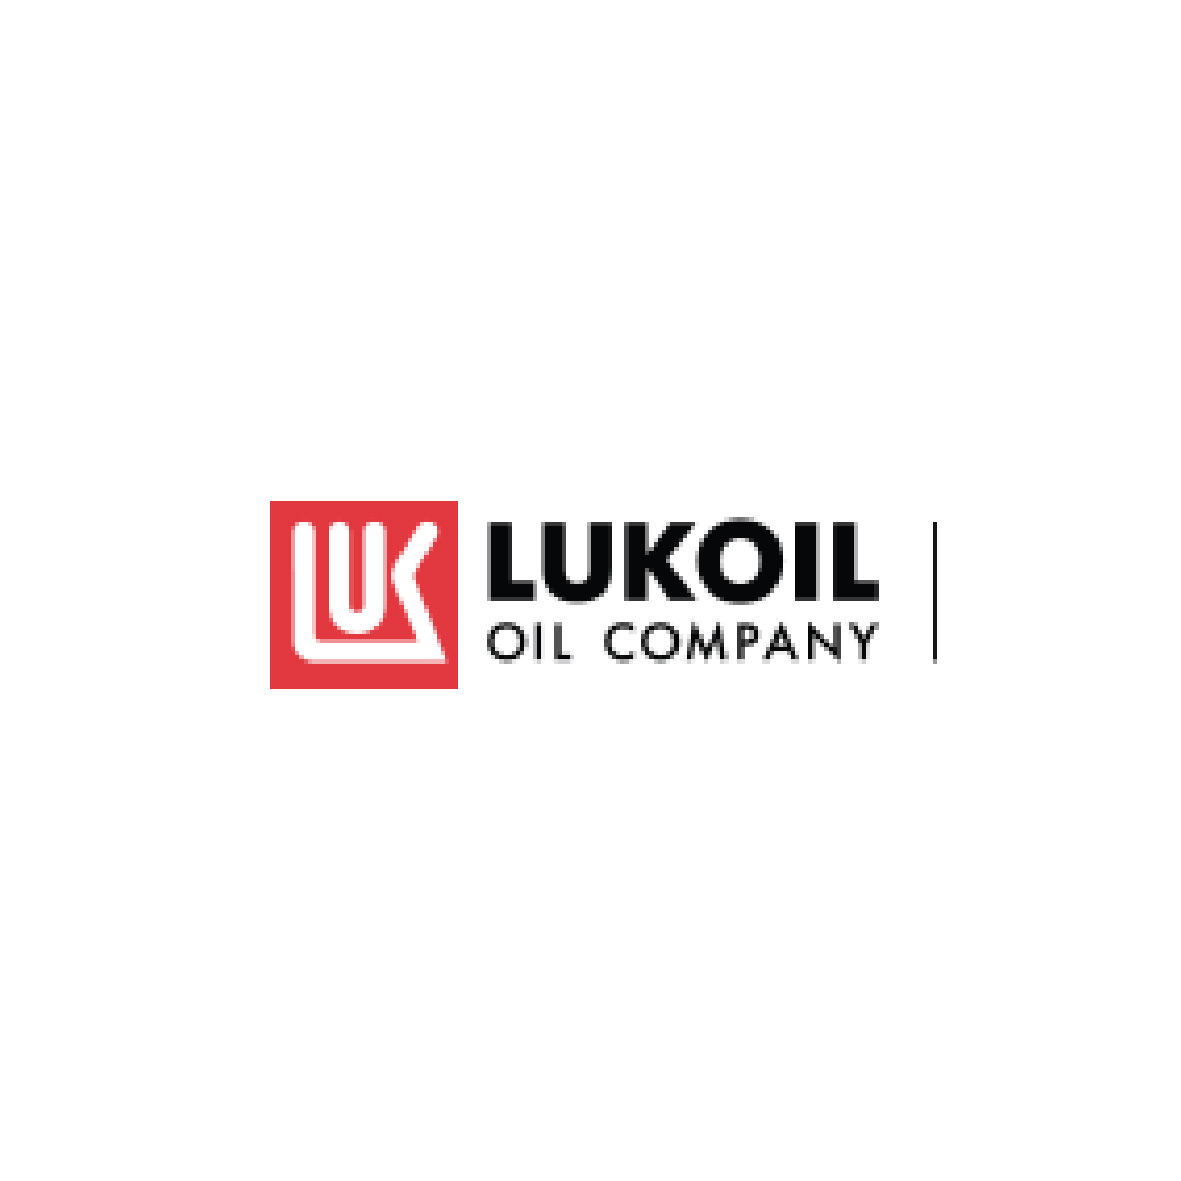 LUKOIL Overseas announces ESIA consultations on Shah Deniz Project